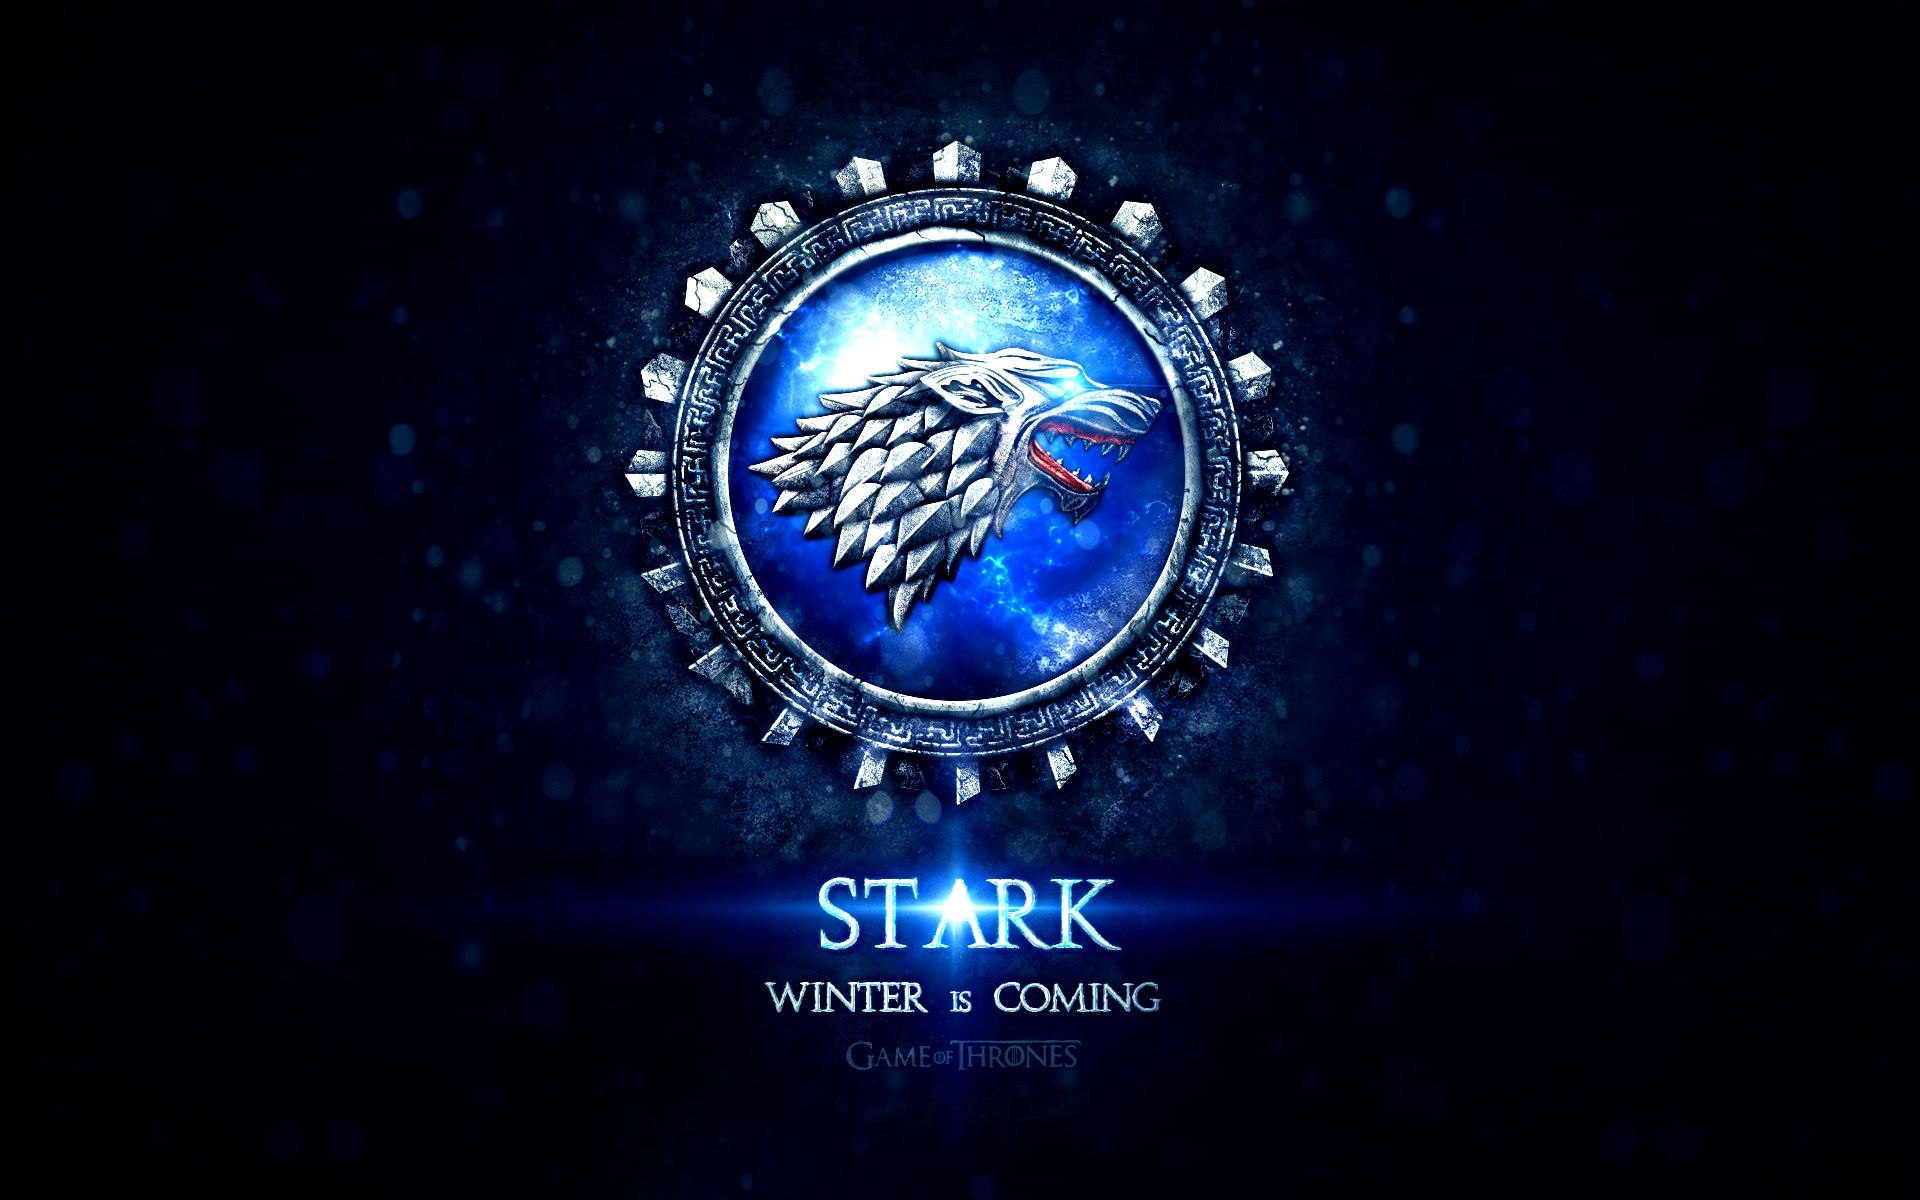 Game of Thrones - House Stark by LiquidSoulDesign on DeviantArt